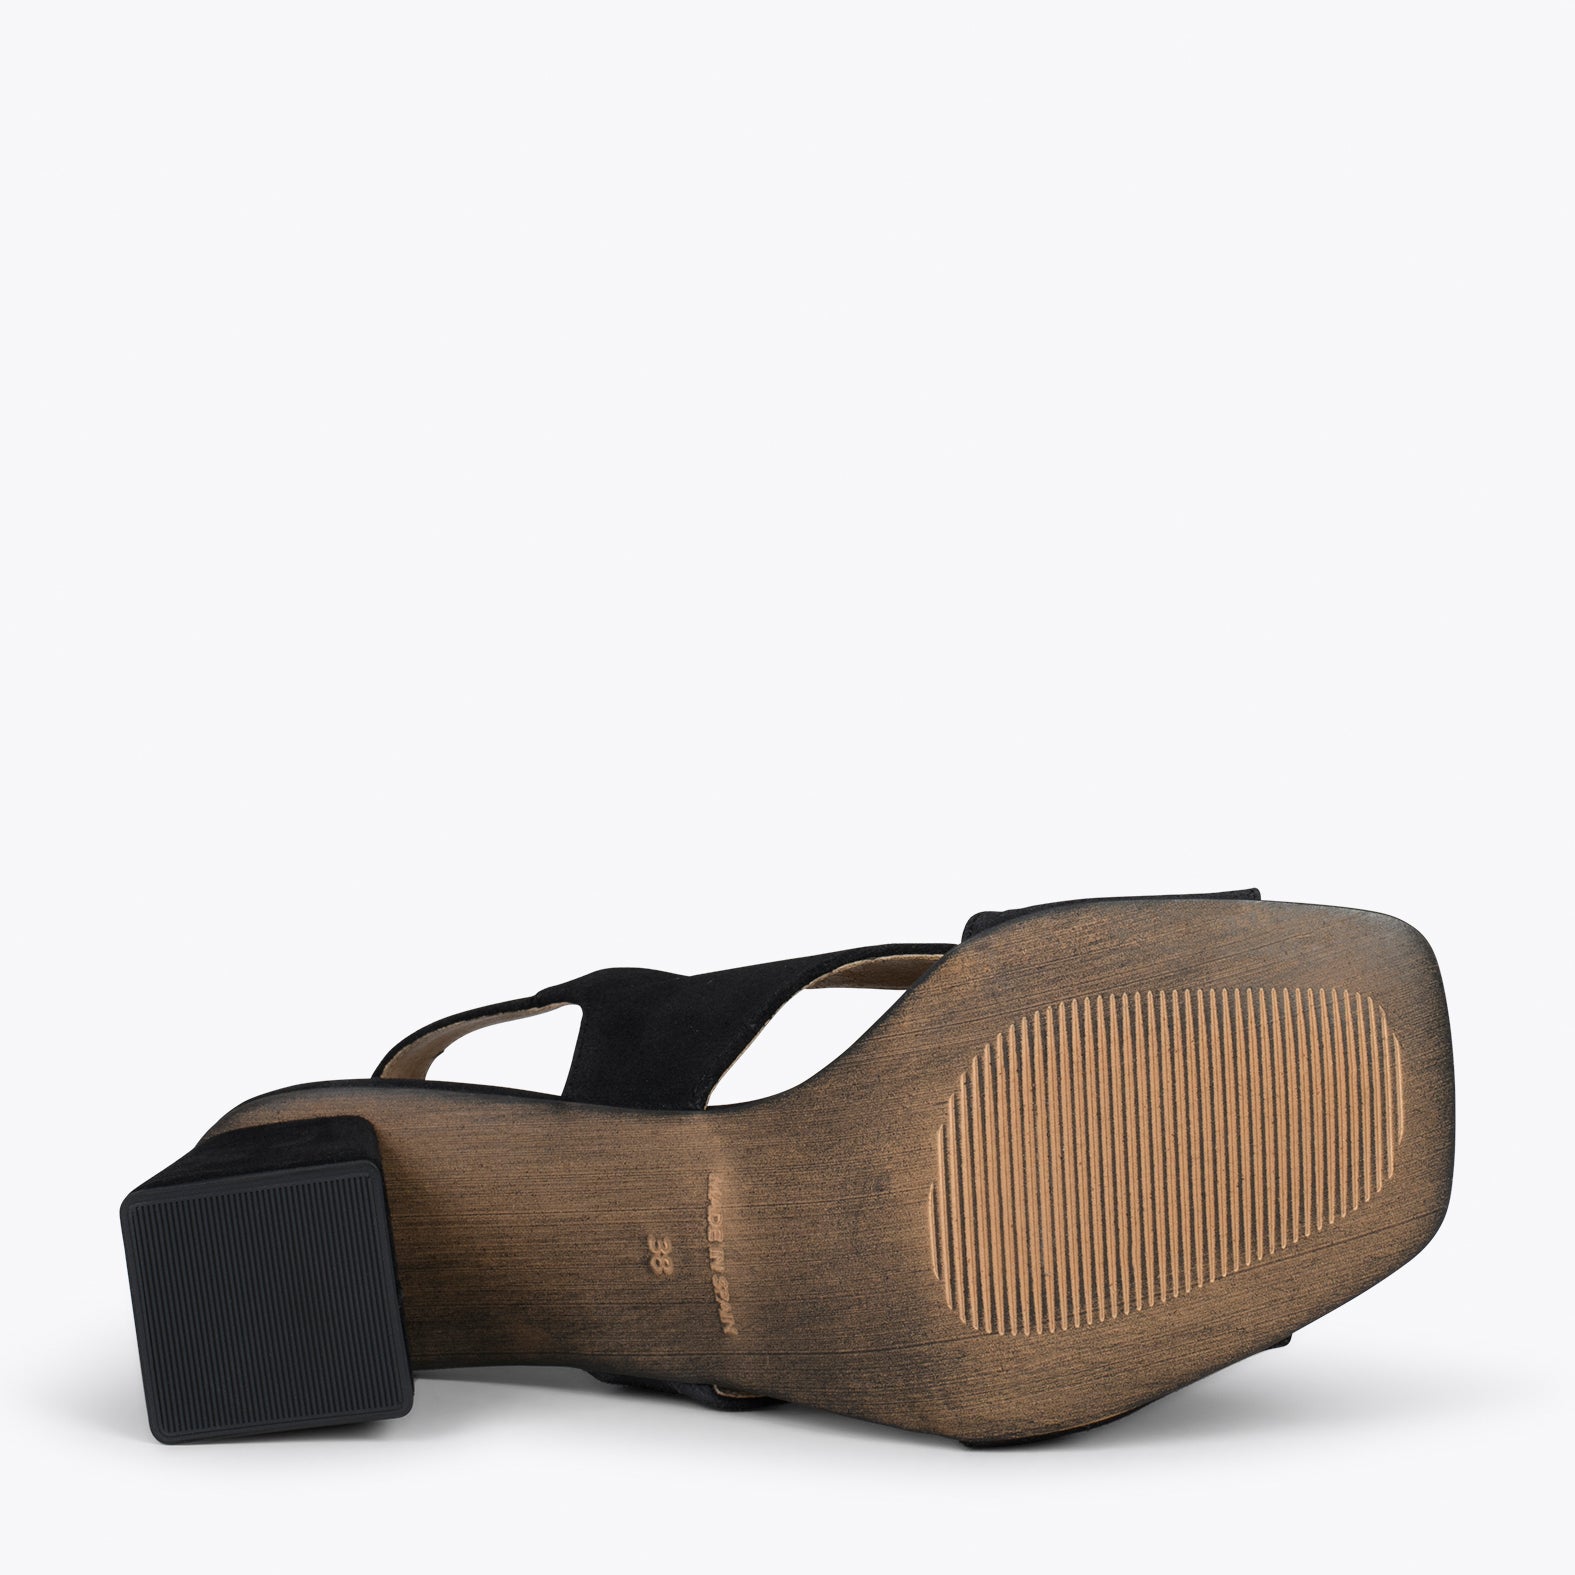 BLOCK – BLACK sling-back sandals with block heel